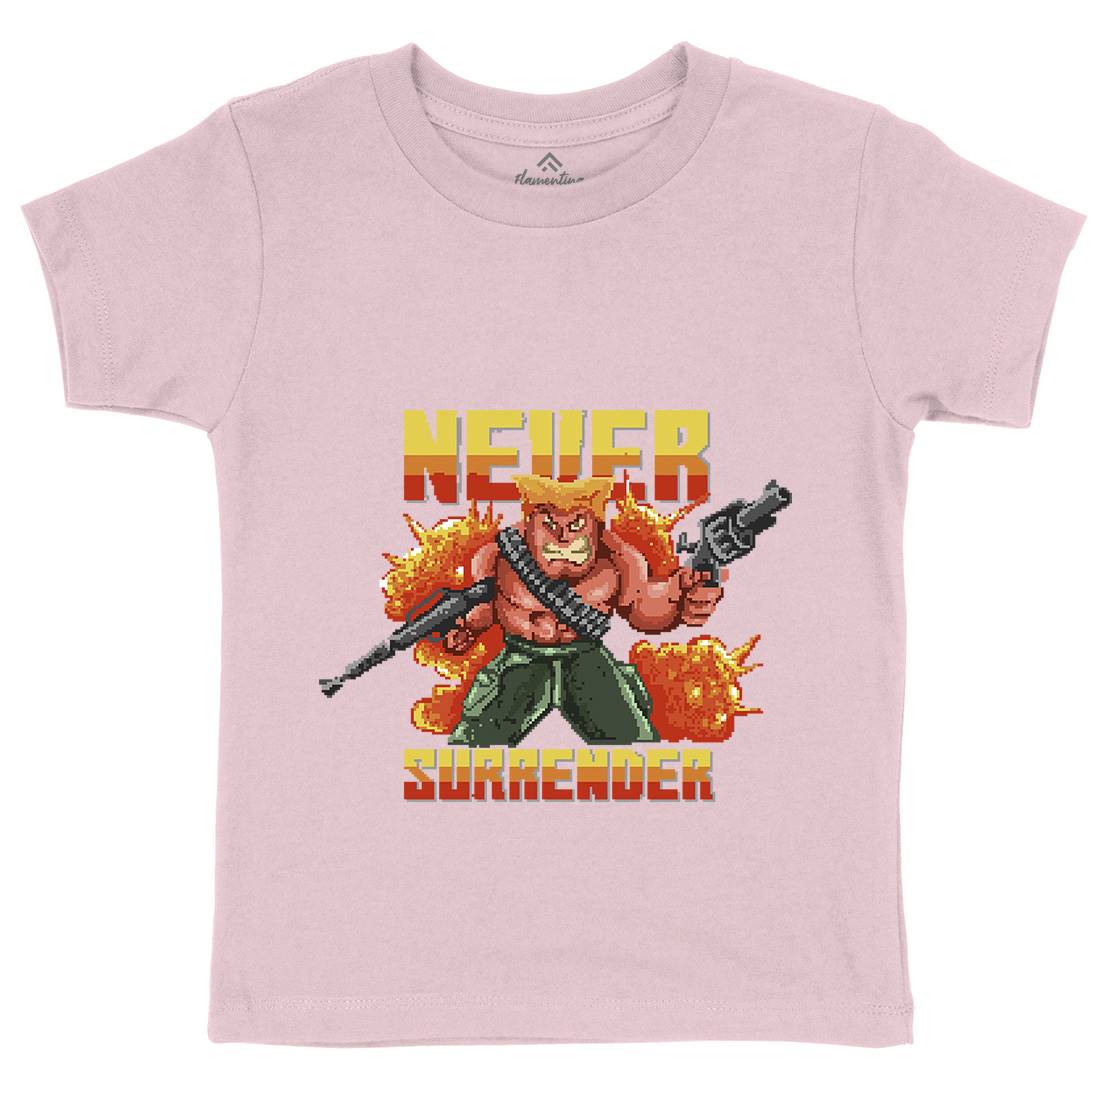 Never Surrender Kids Crew Neck T-Shirt Army B939